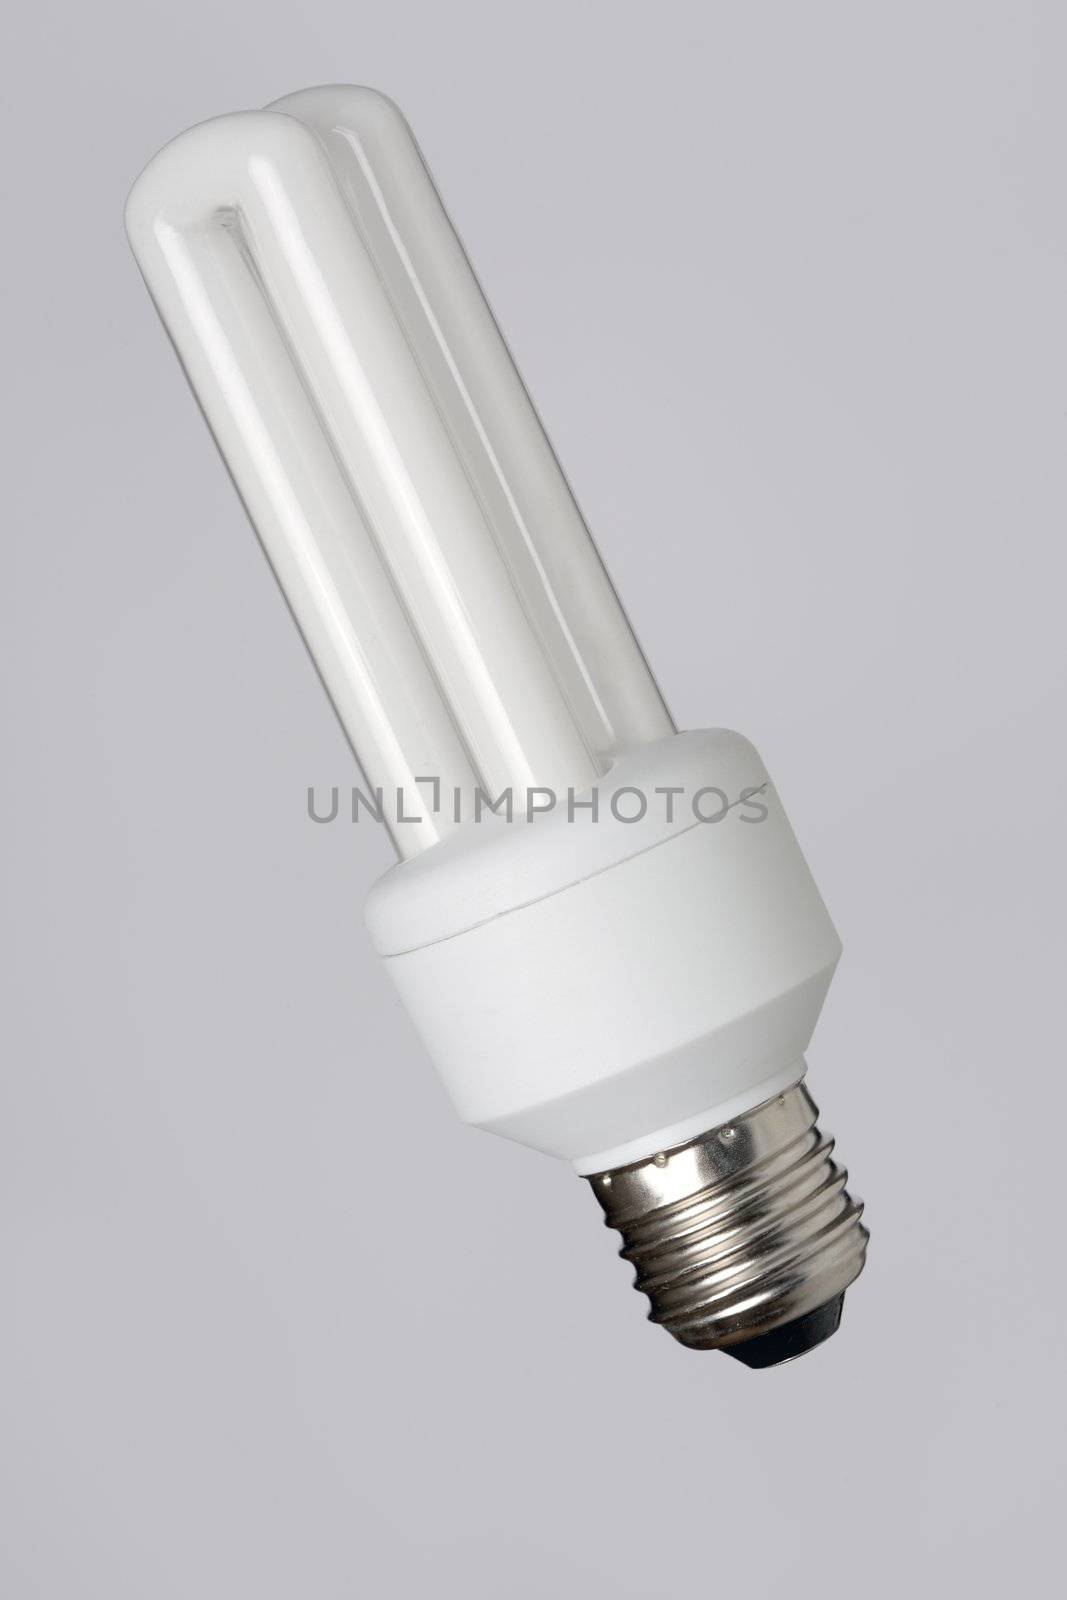 Energy saving bulb by Stocksnapper